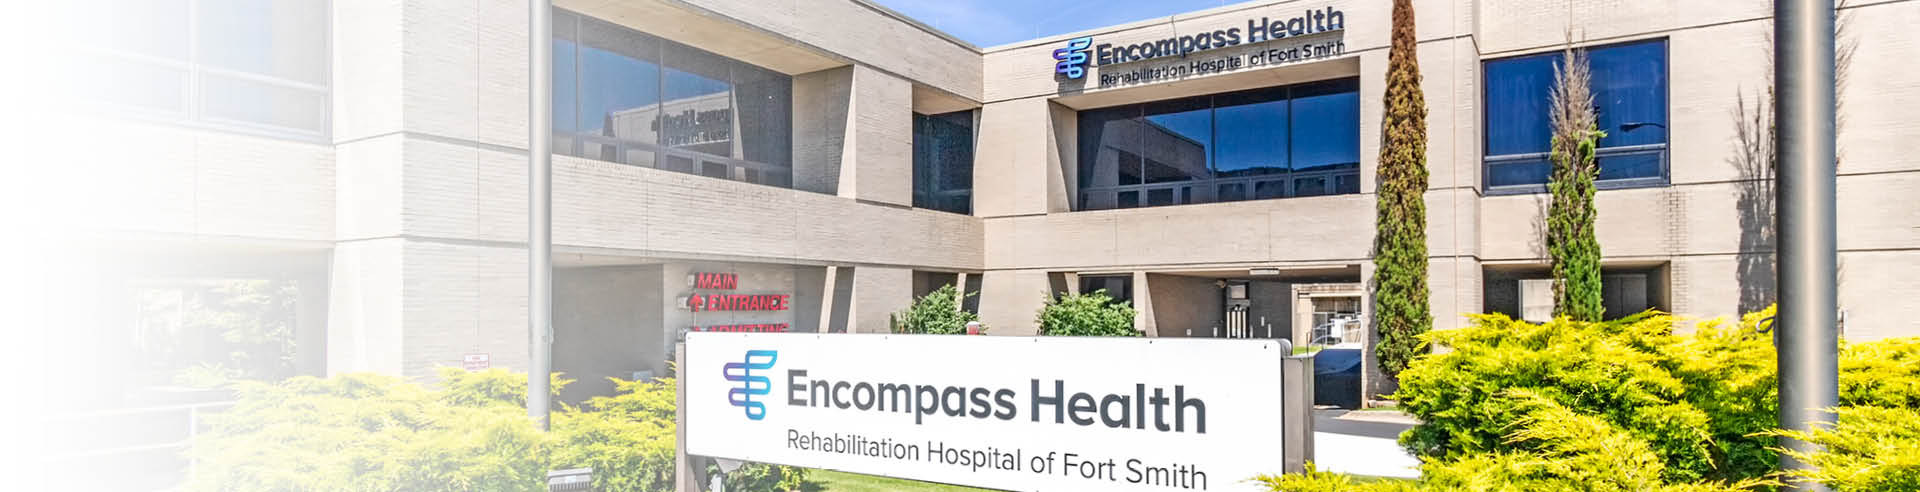 Encompass Health Rehabilitation Hospital of Fort Smith exterior image